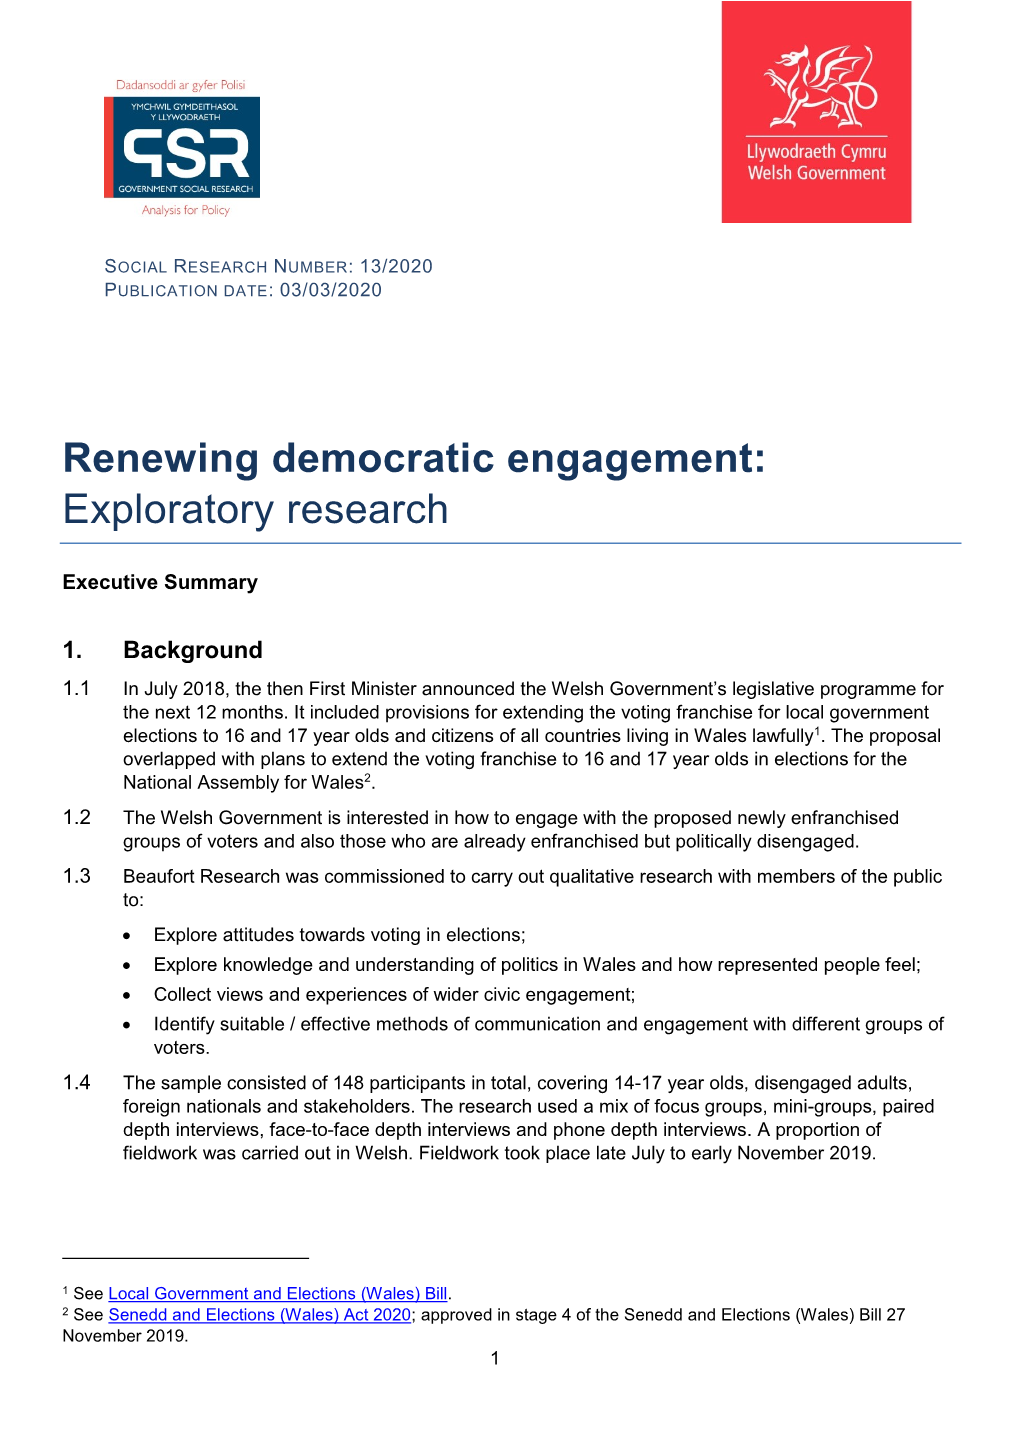 Renewing Democratic Engagement: Exploratory Research